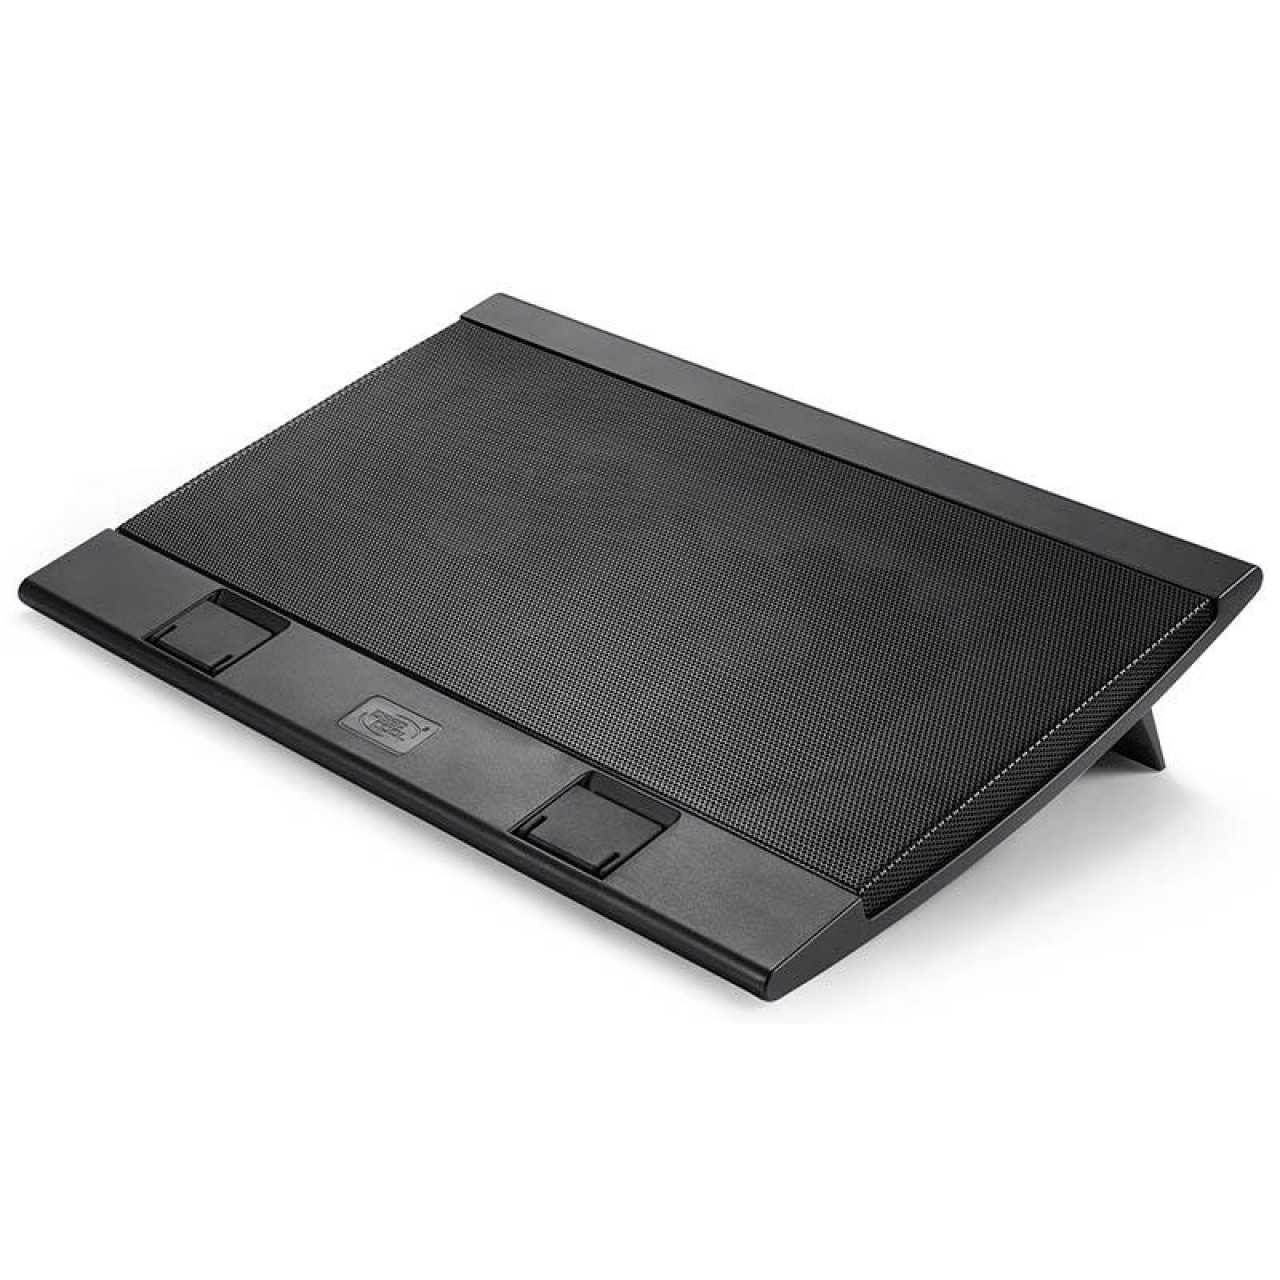 Вентилятор для охлаждения ноутбука DEEPCOOL WIND PAL FS black